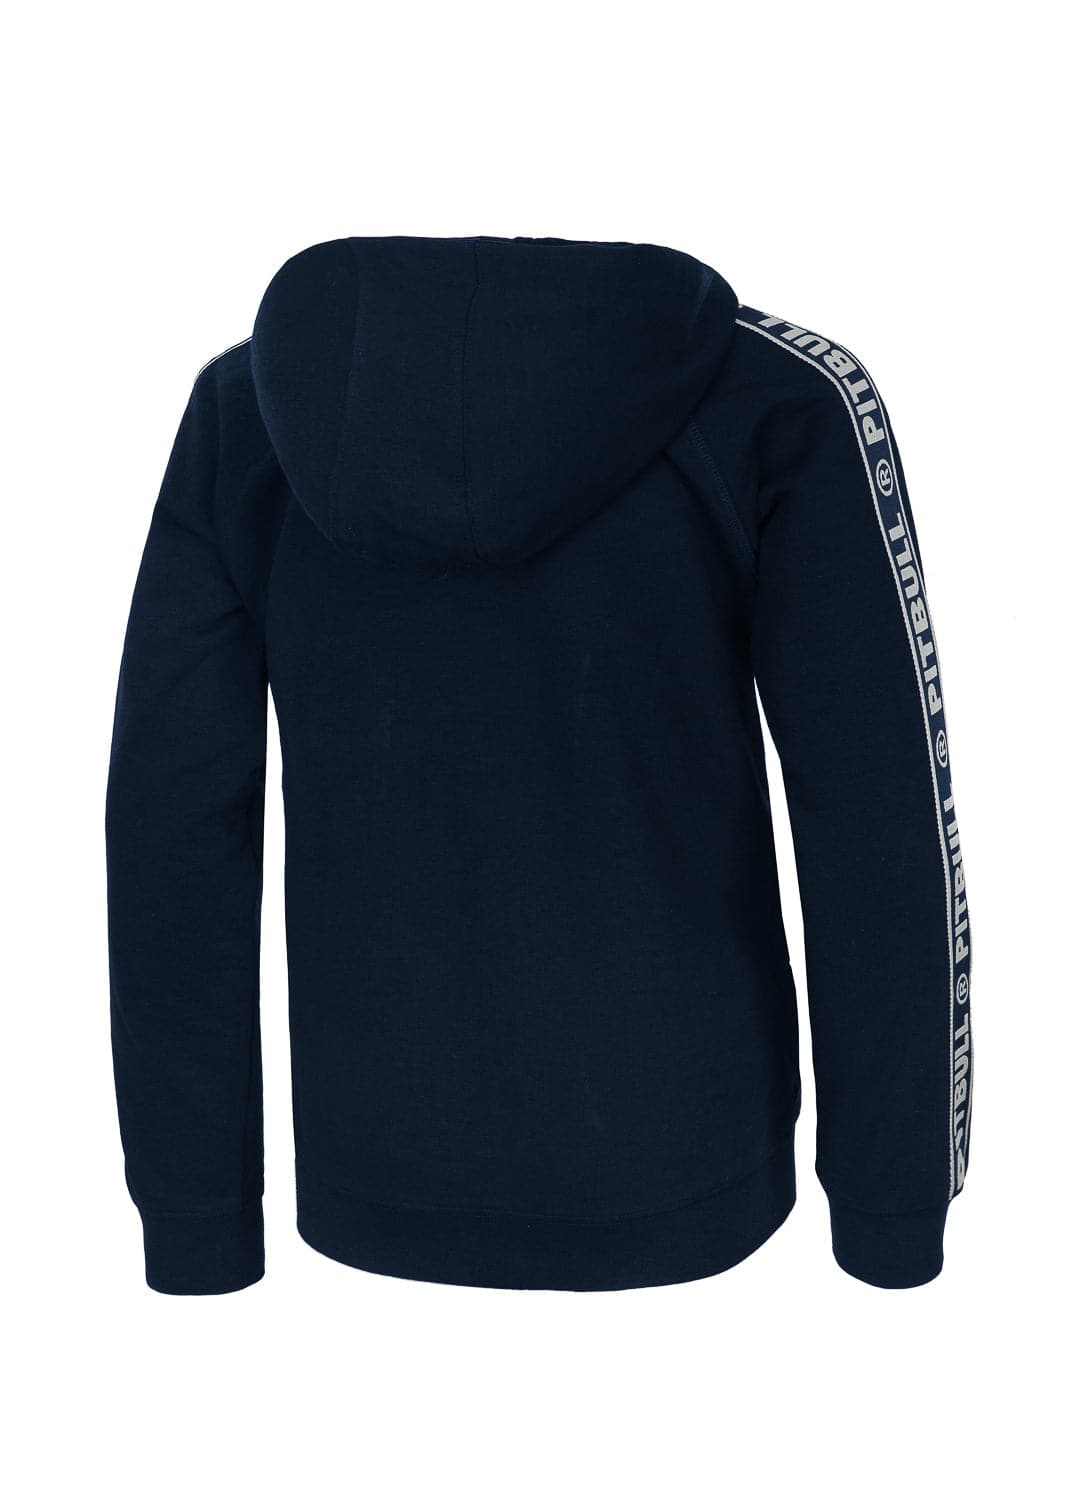 DANDRIDGE Kids black zip hoodie - Pitbull West Coast International Store 